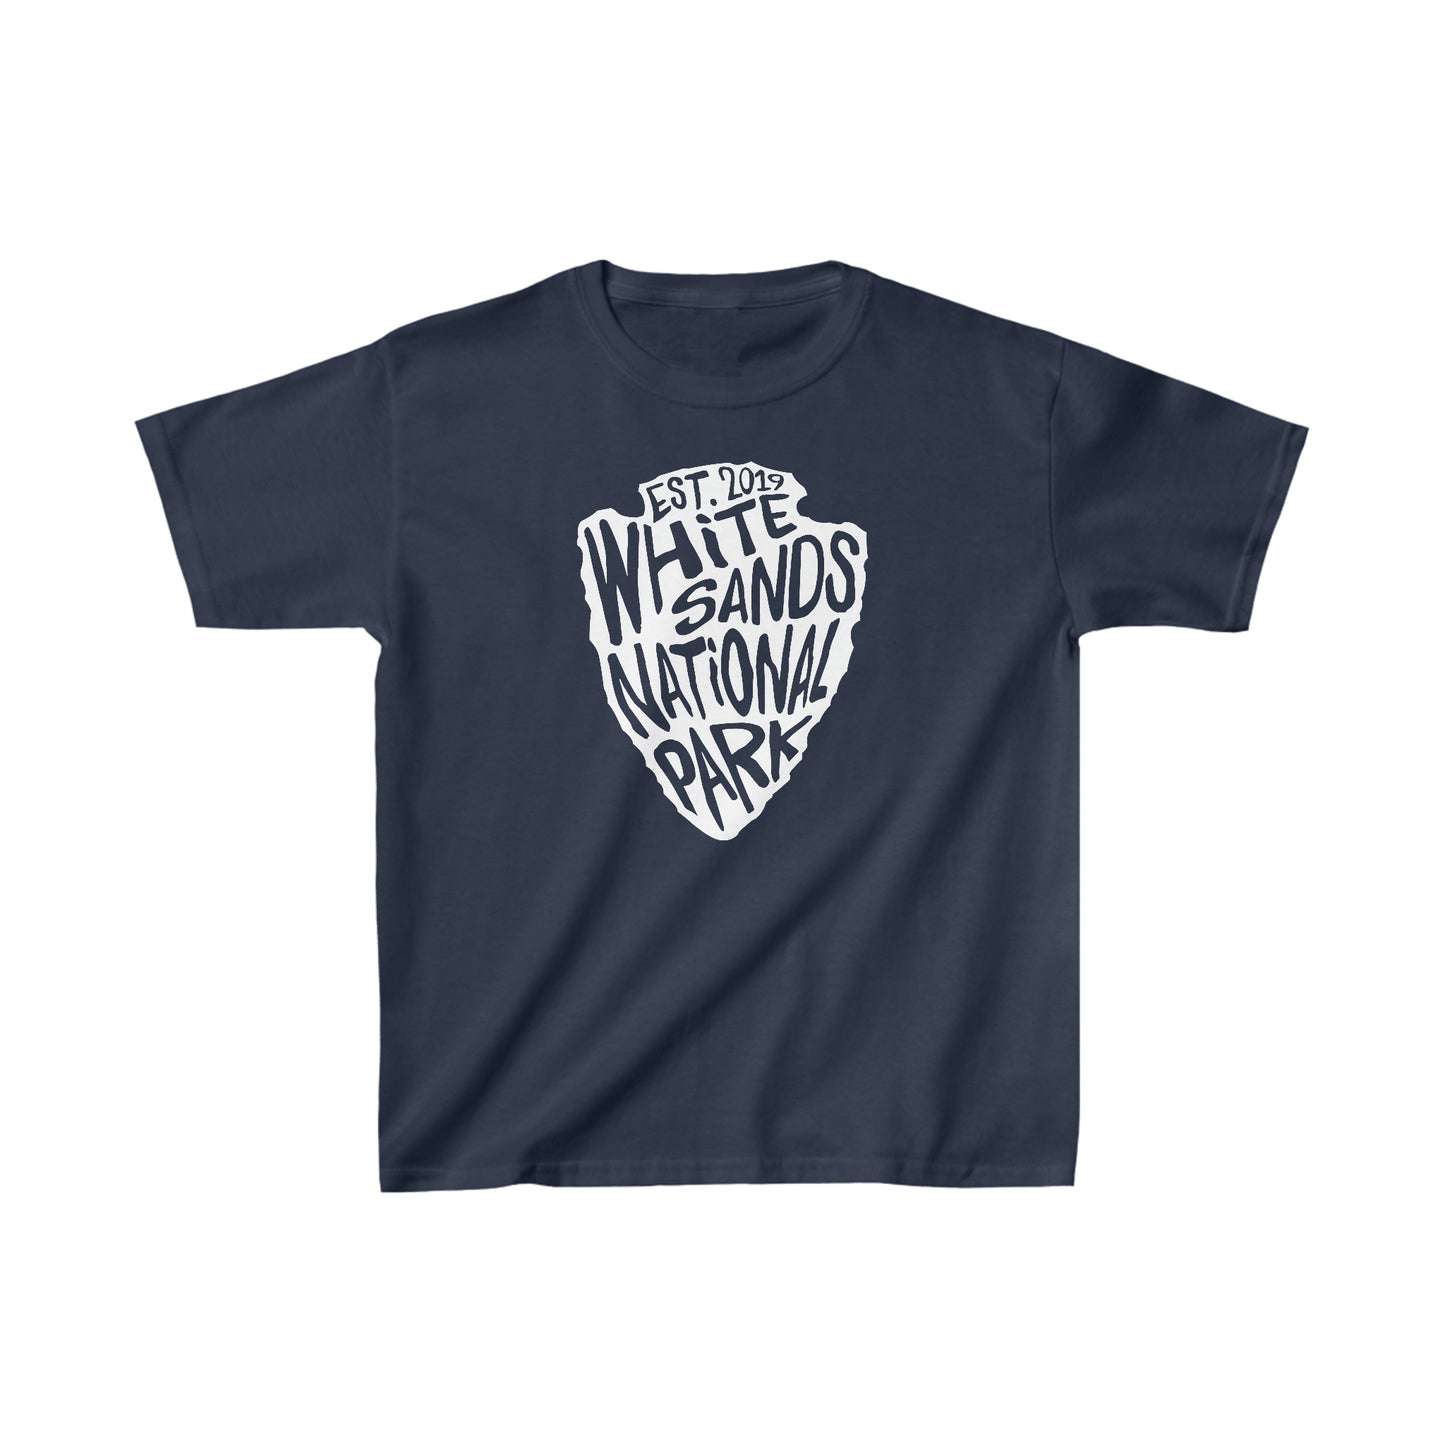 White Sands National Park Child T-Shirt - Arrowhead Design